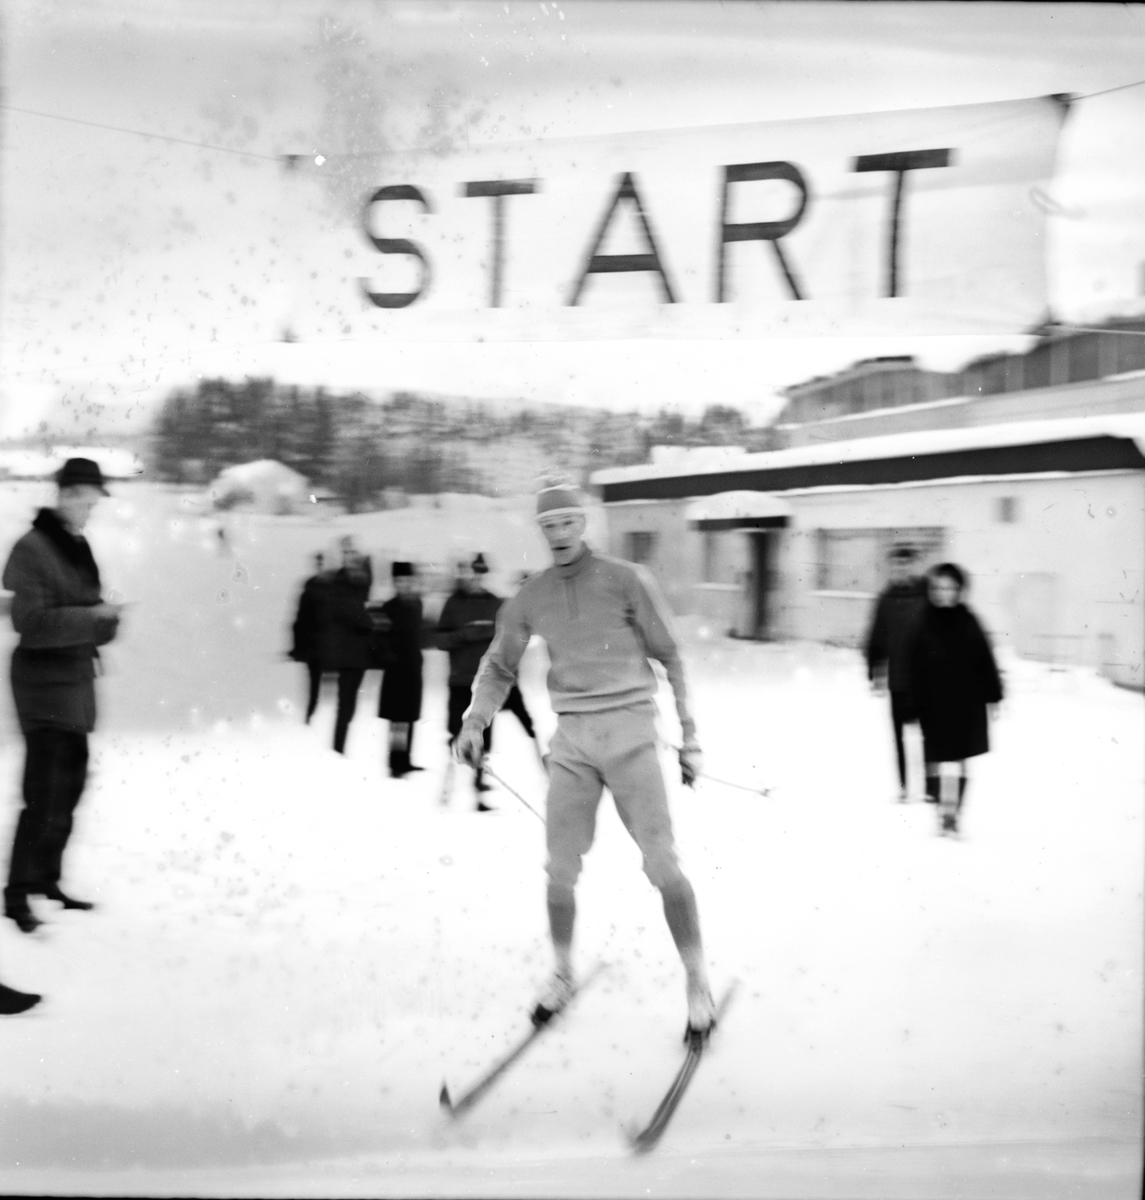 Arbrå,
TV-loppet 1969,
Trettondan,
Conny Bodén, Oscar Segelberg, G. Fröderberg